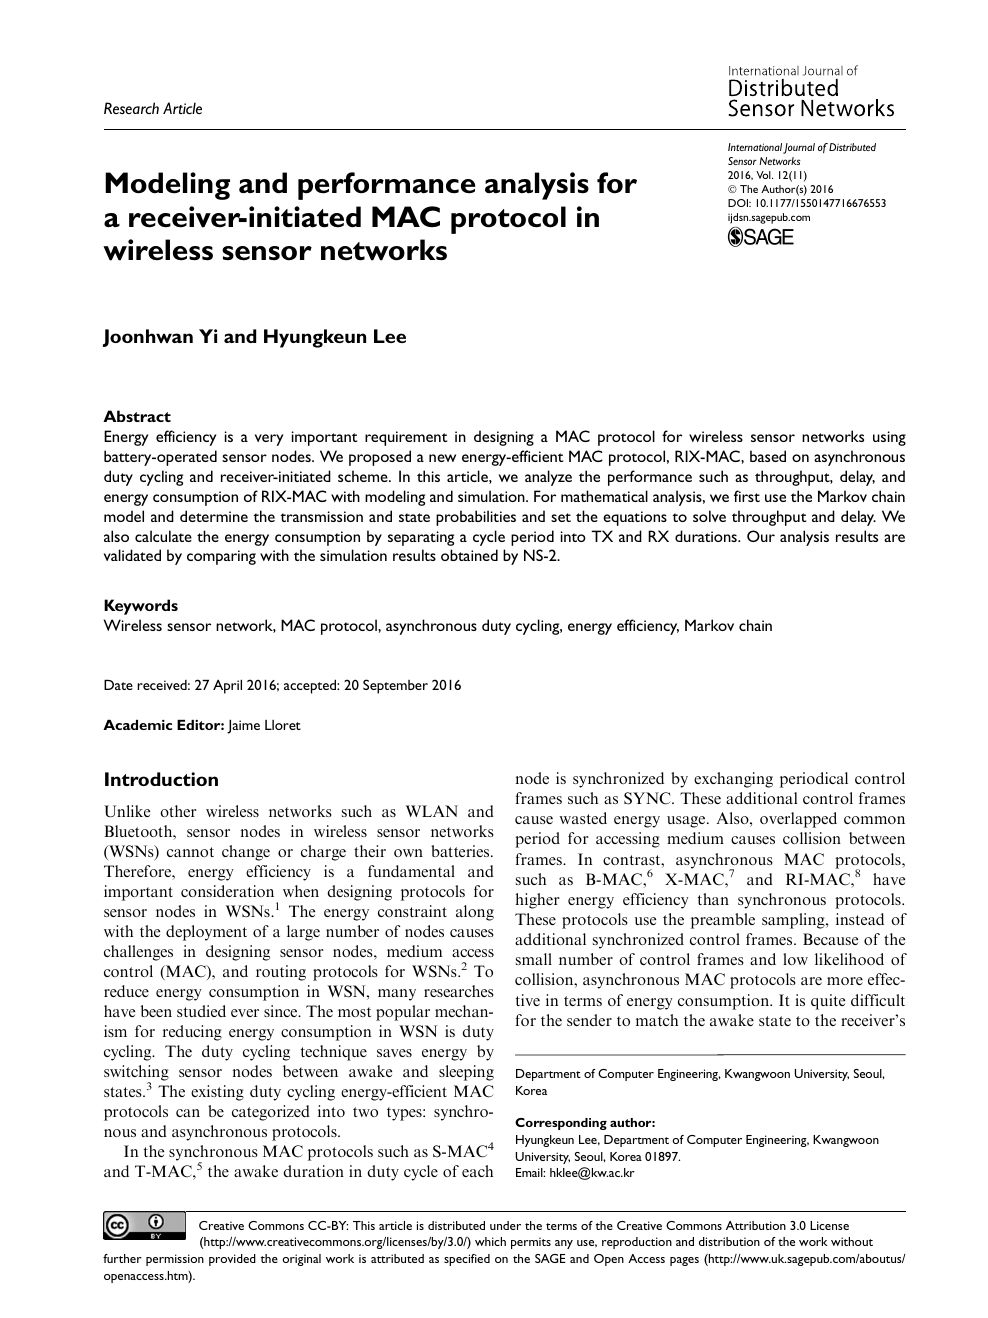 analysis of receiver initiated mac protocol for wireless sensor networks